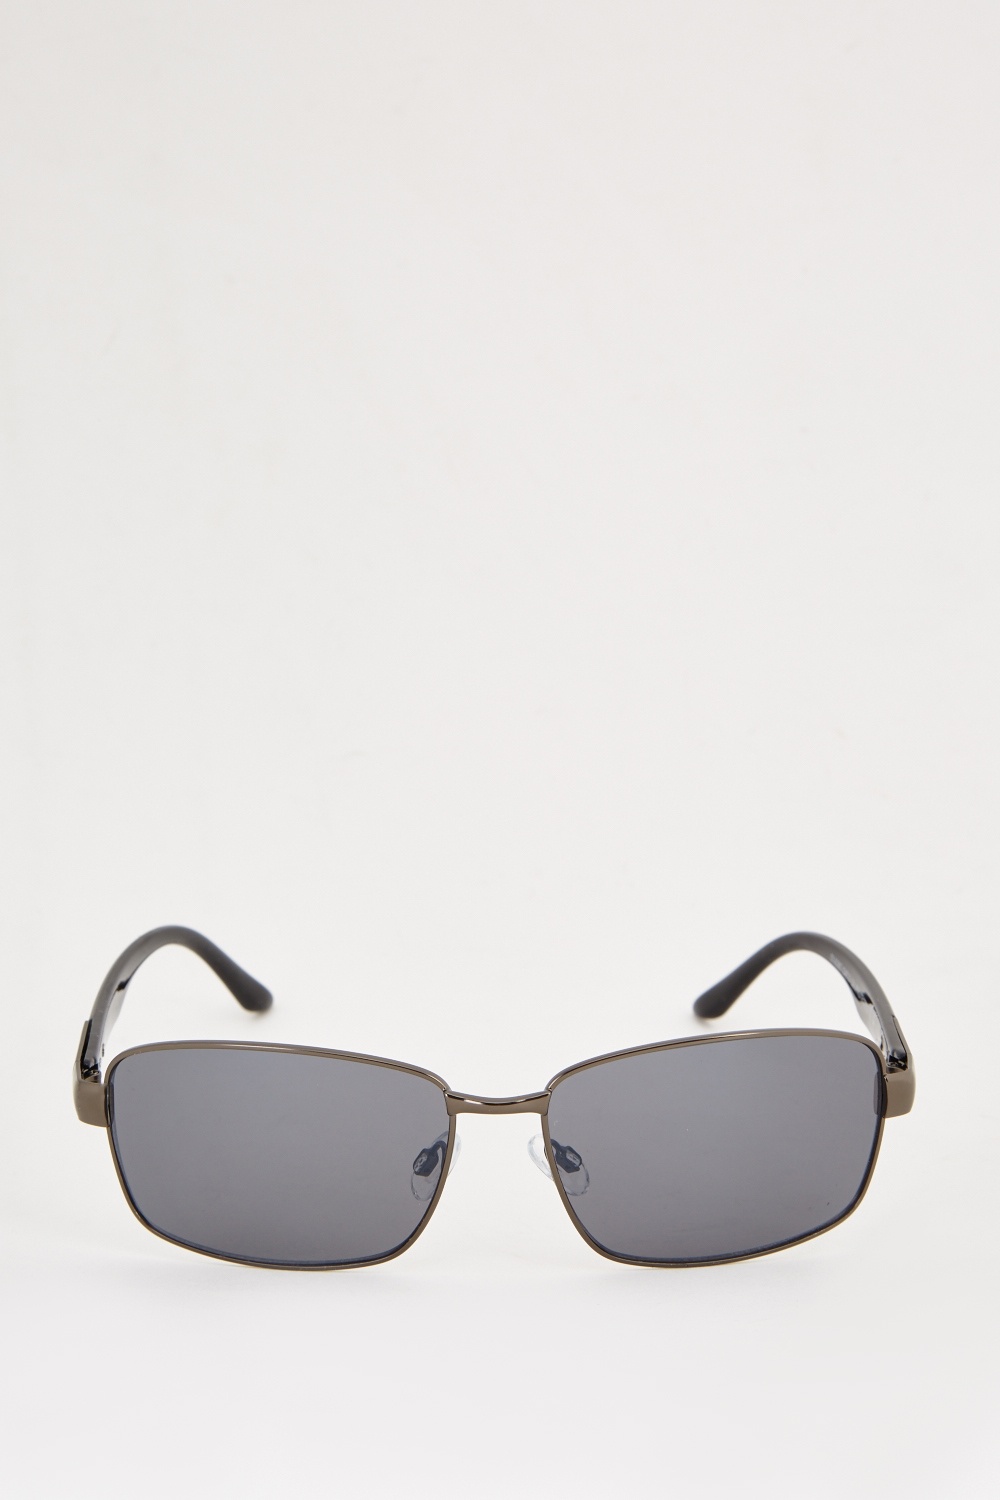 Wayfarer Classic Sunglasses - Just $7